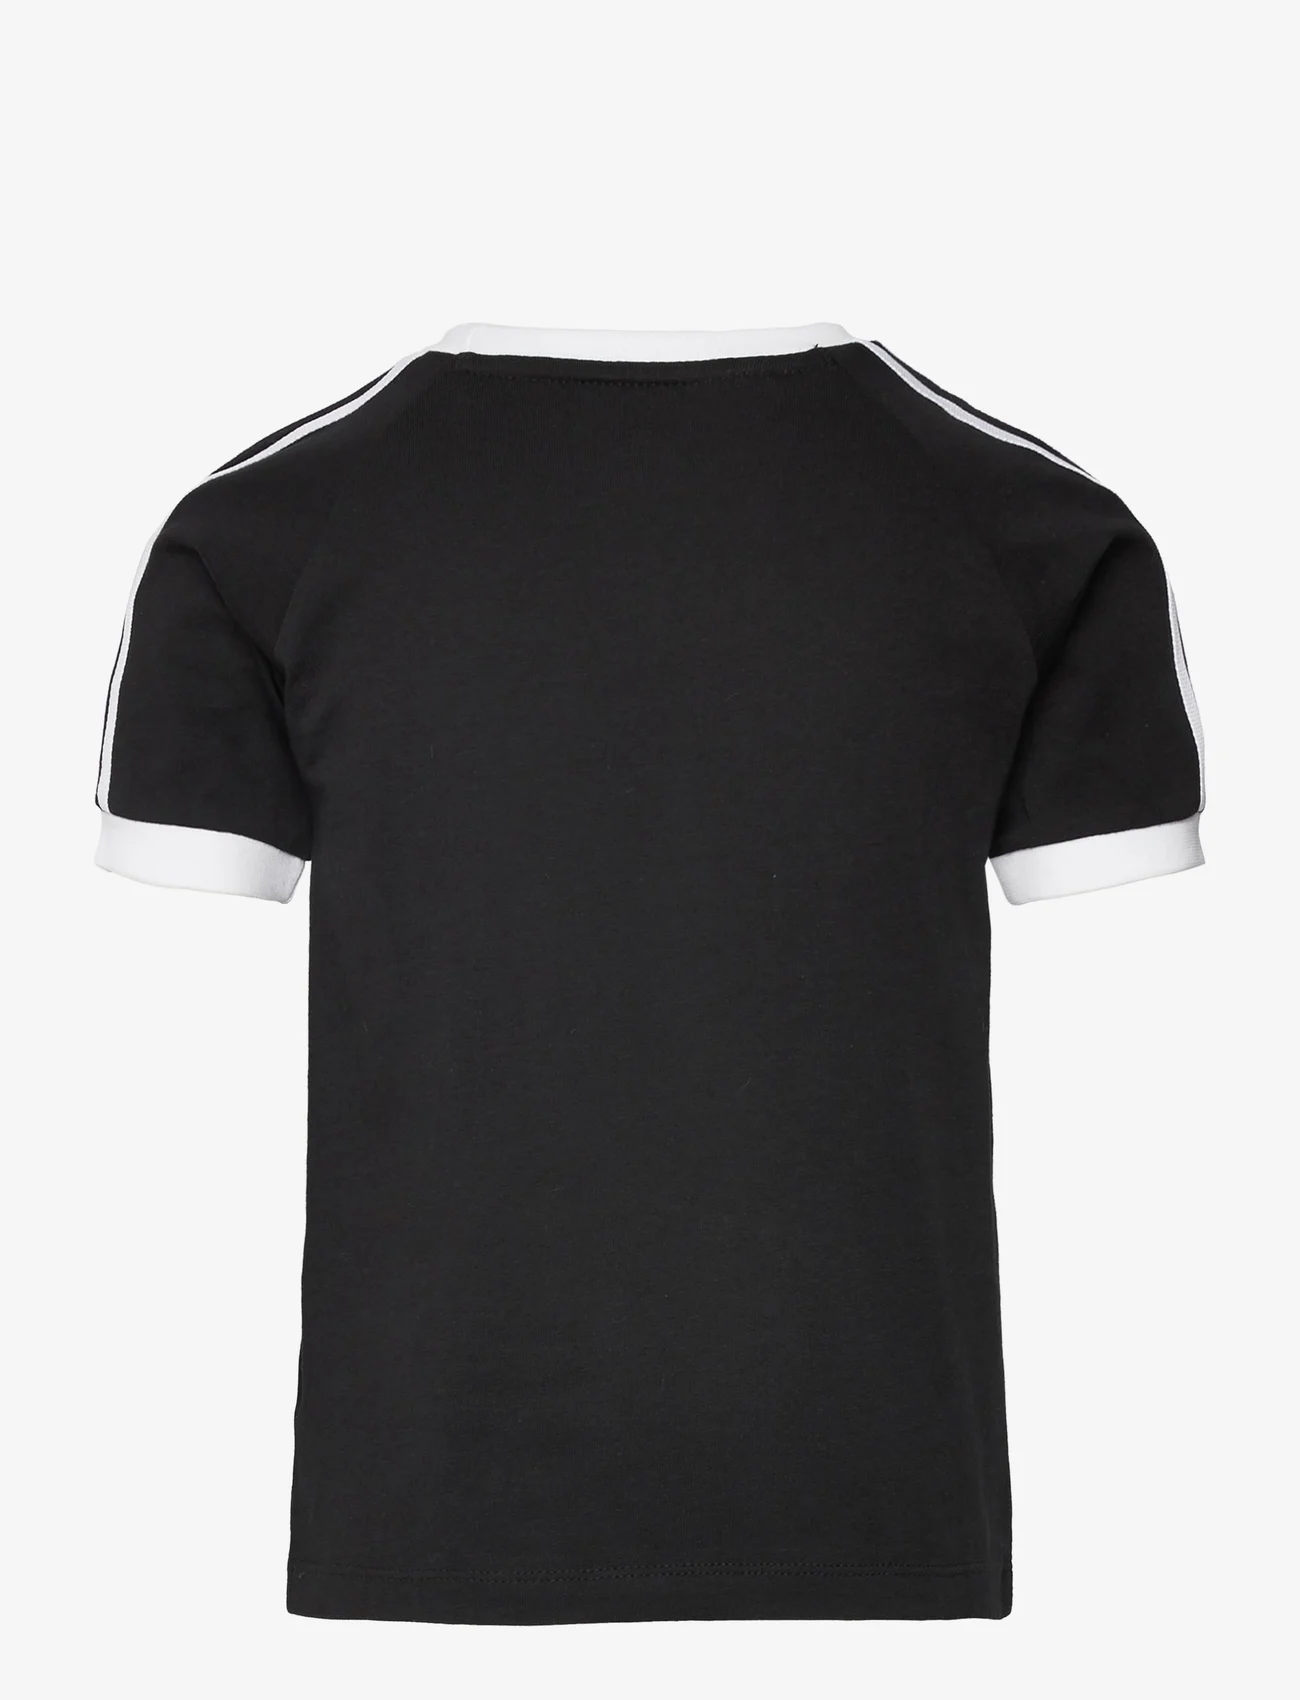 adidas Originals - 3STRIPES TEE - kortermede t-skjorter - black/white - 1